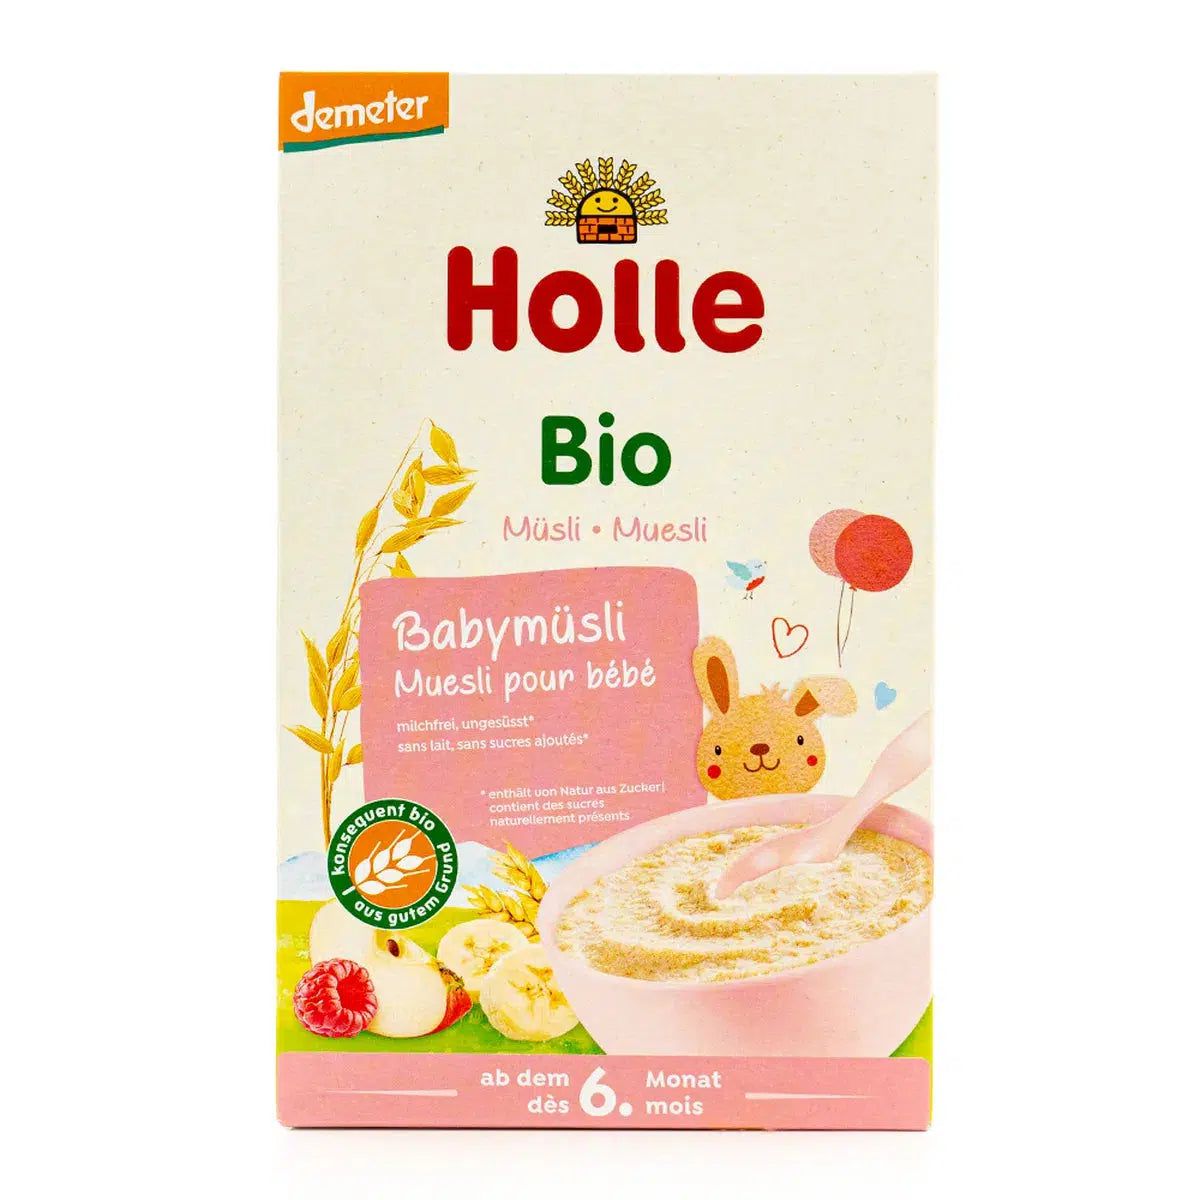 EU Organic Baby Food